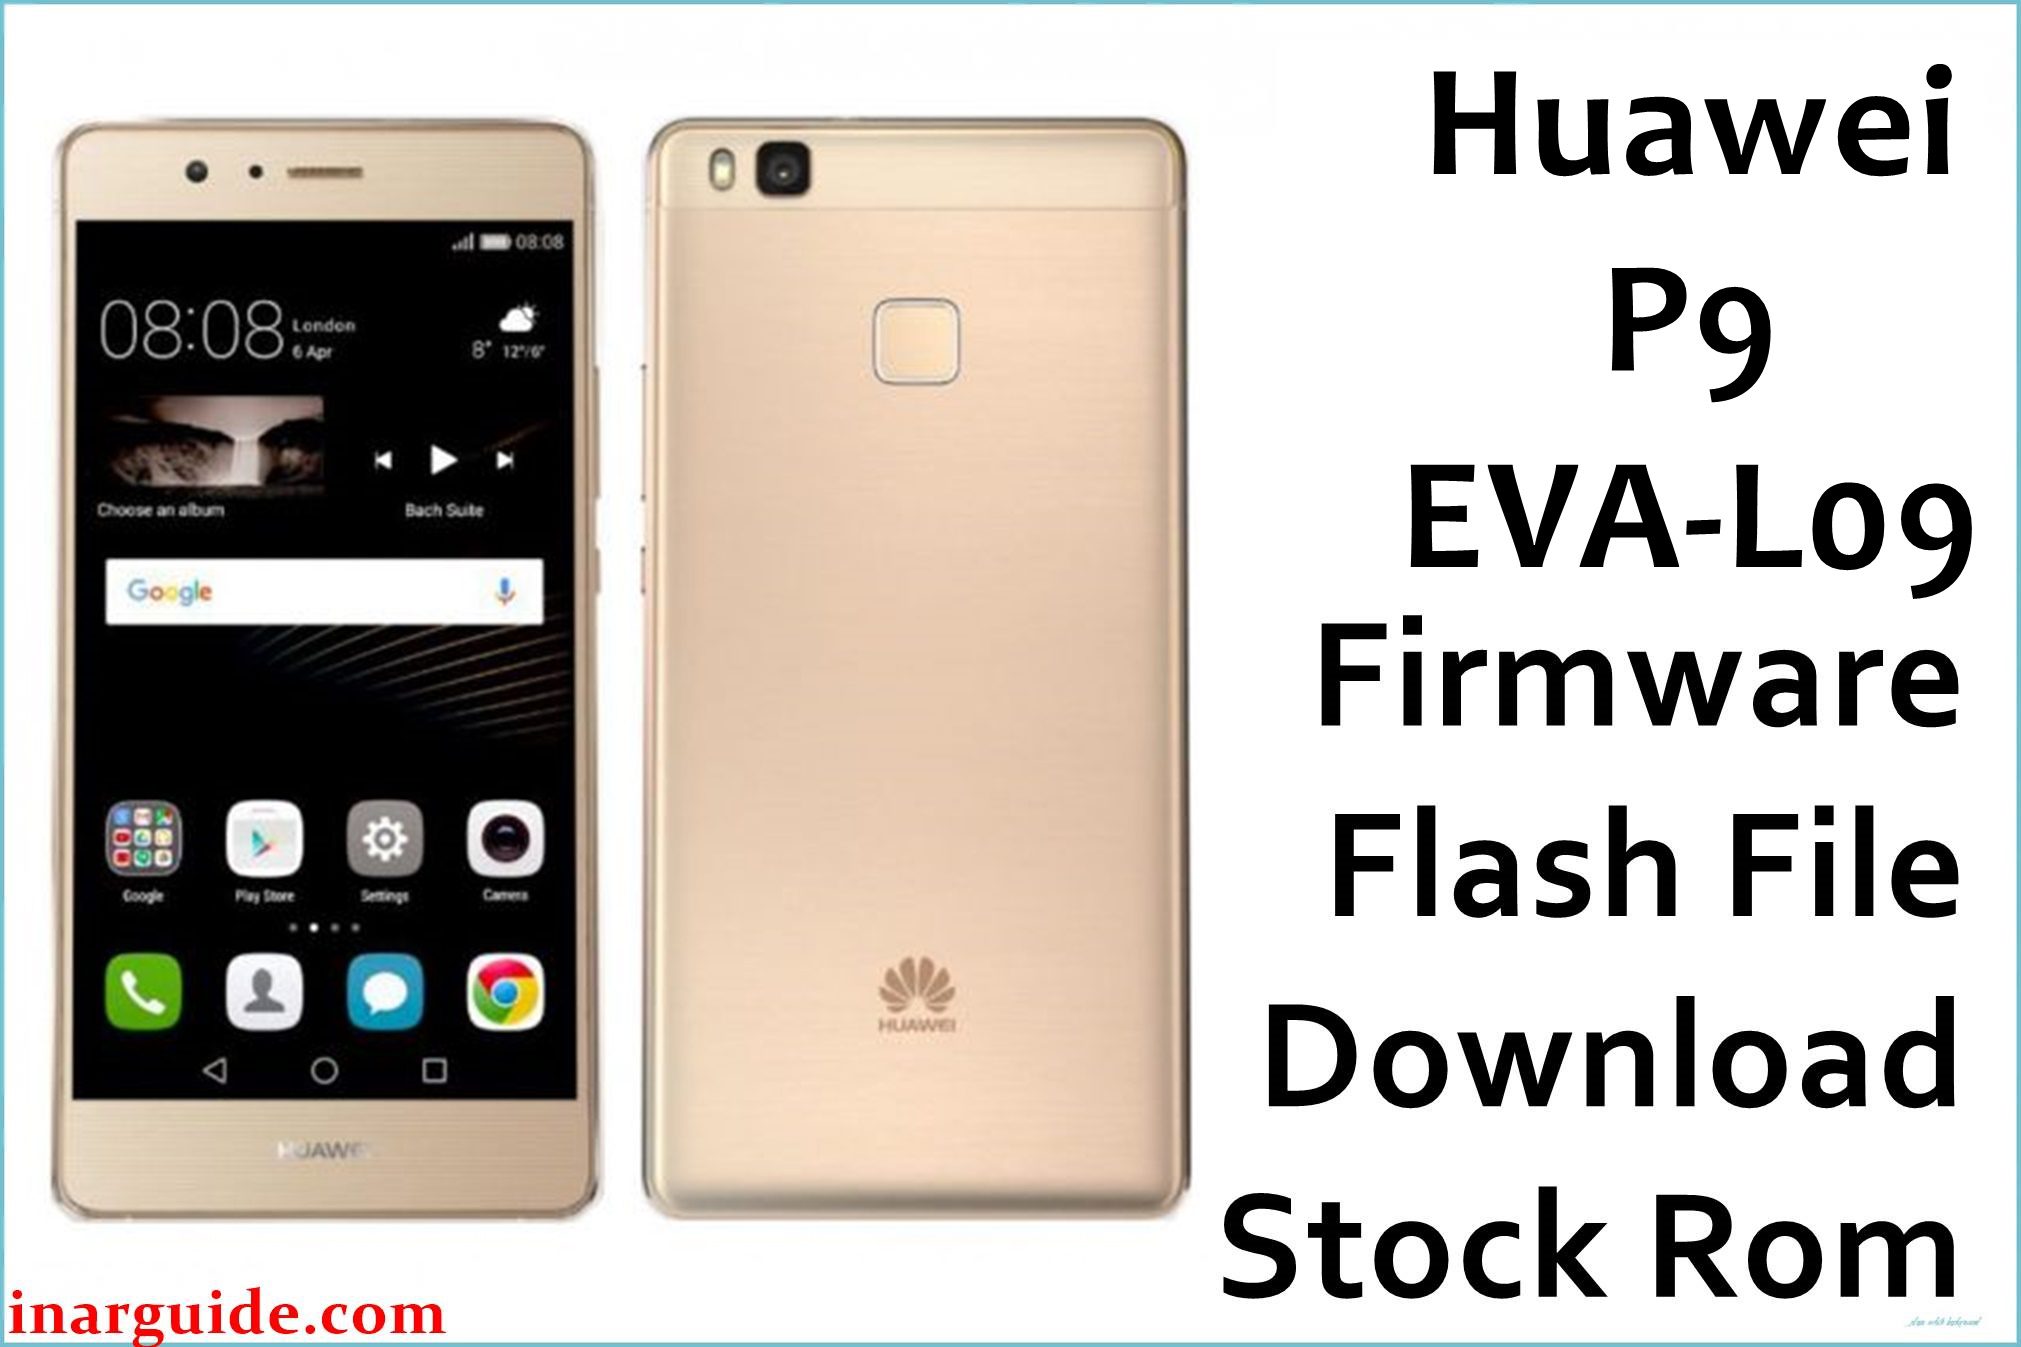 Huawei P9 EVA L09